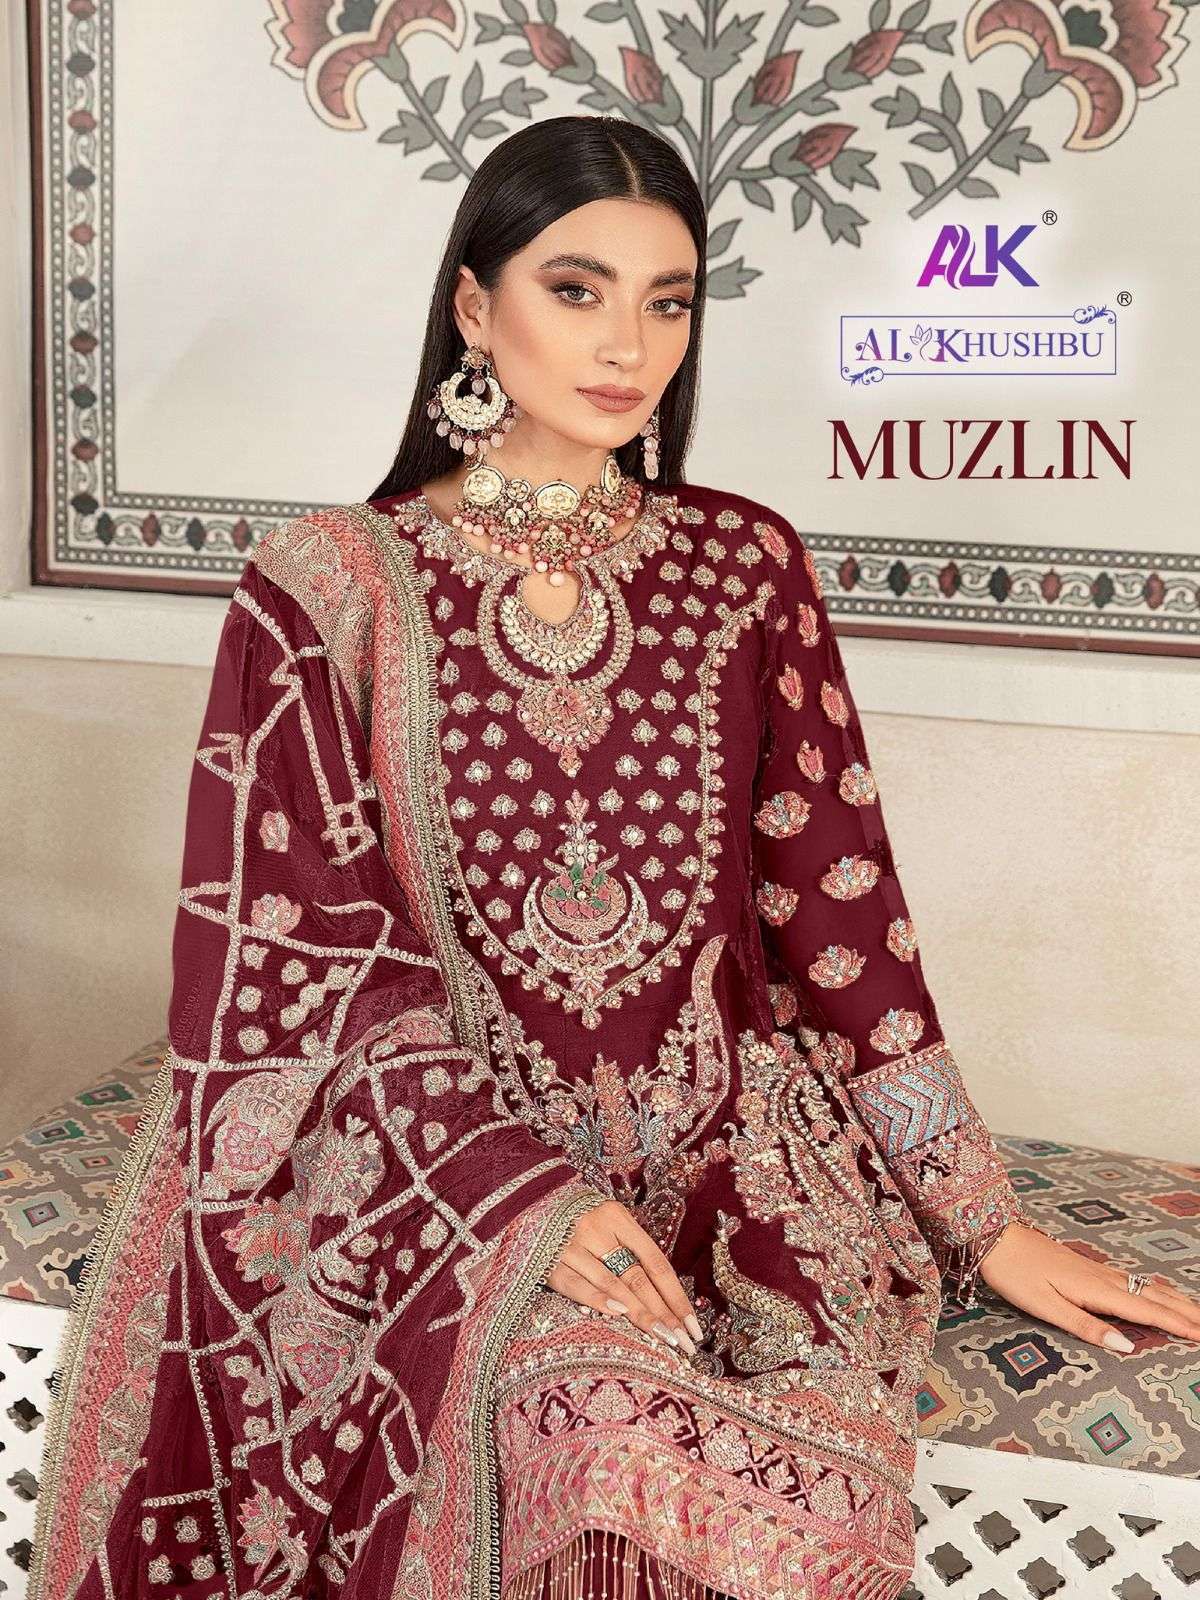 al khushbu muzlin vol 1 series 4022 georgette embroidered suit 